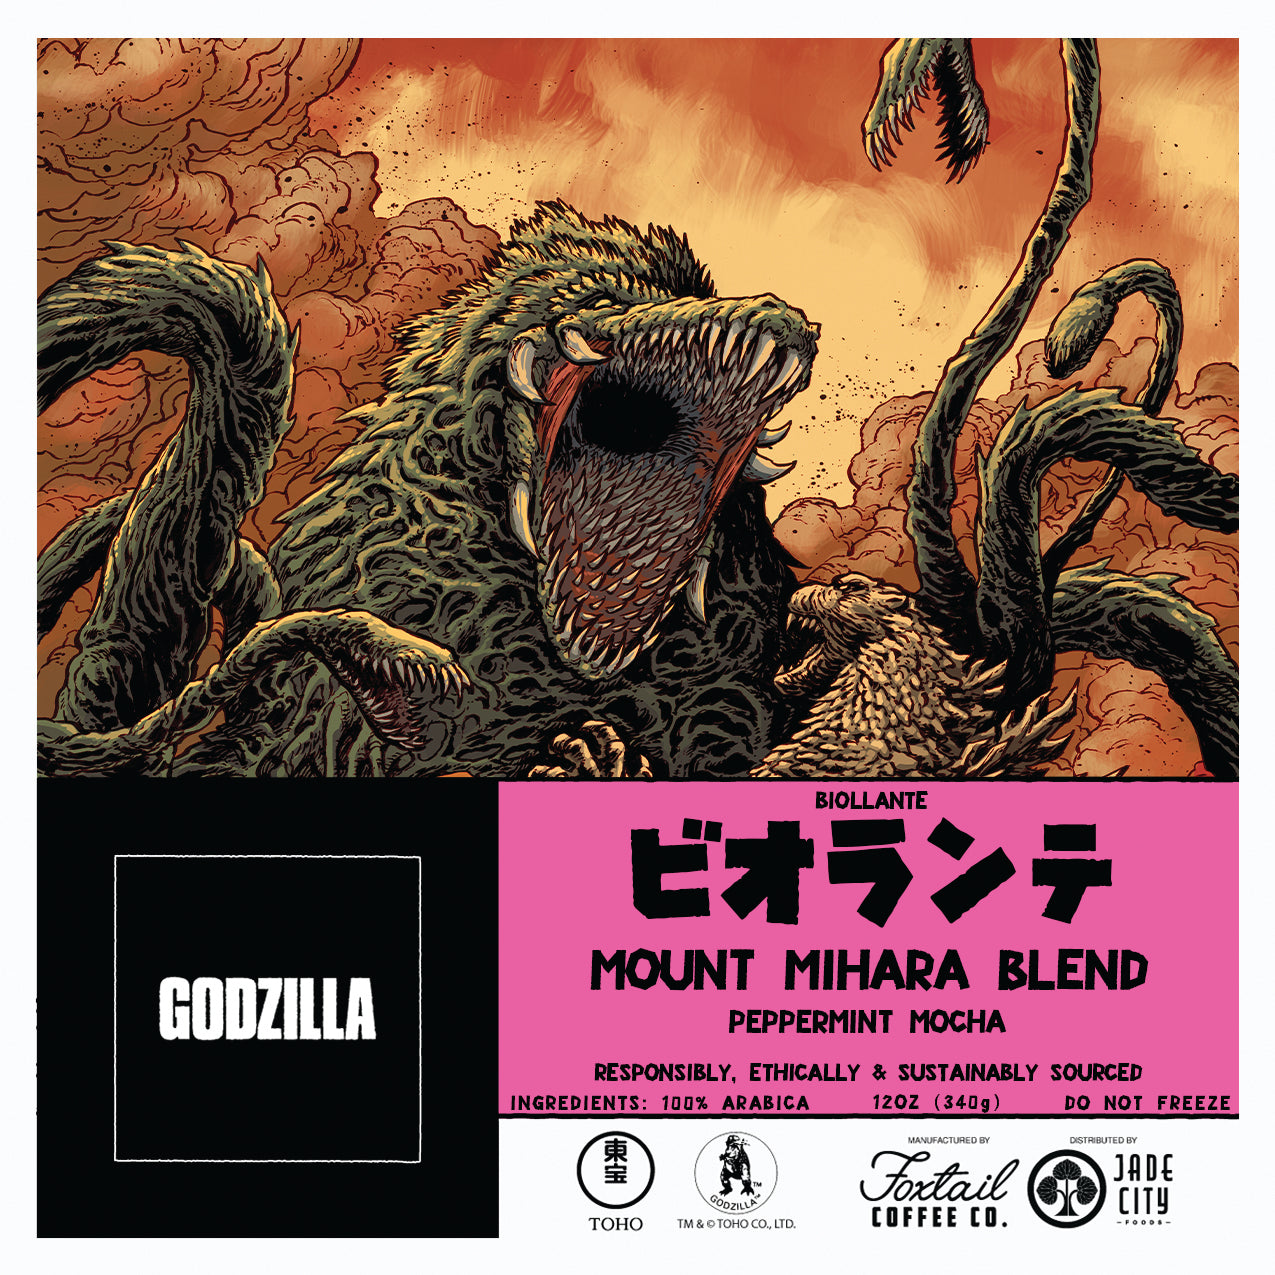 Biollante's Mount Mihara Blend (Peppermint Mocha)